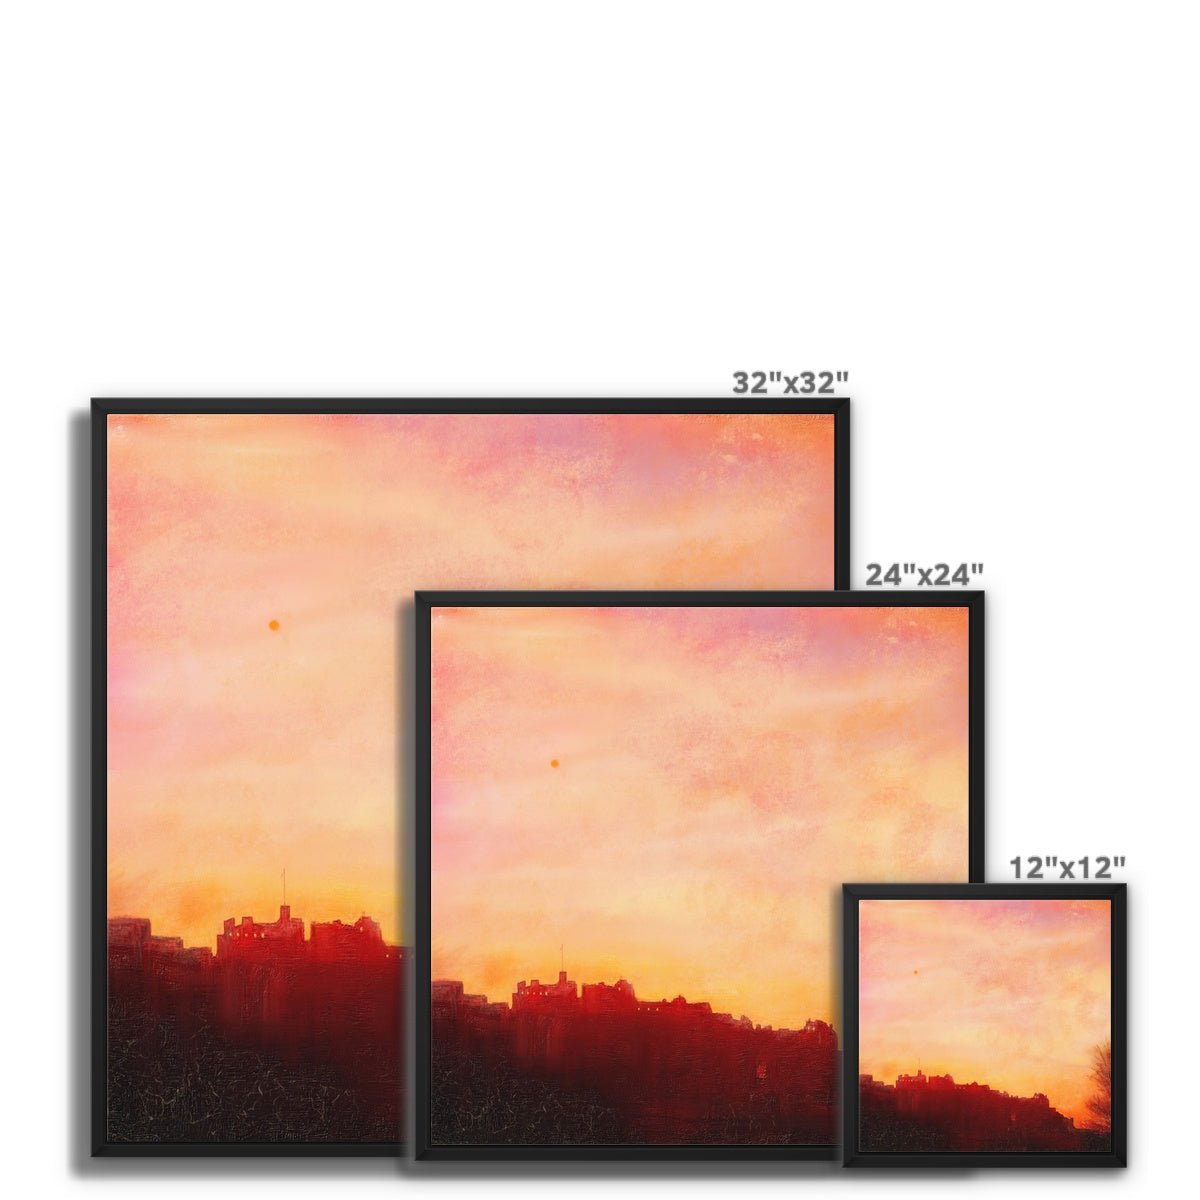 Edinburgh Castle Sunset Painting | Framed Canvas From Scotland-Floating Framed Canvas Prints-Edinburgh & Glasgow Art Gallery-Paintings, Prints, Homeware, Art Gifts From Scotland By Scottish Artist Kevin Hunter